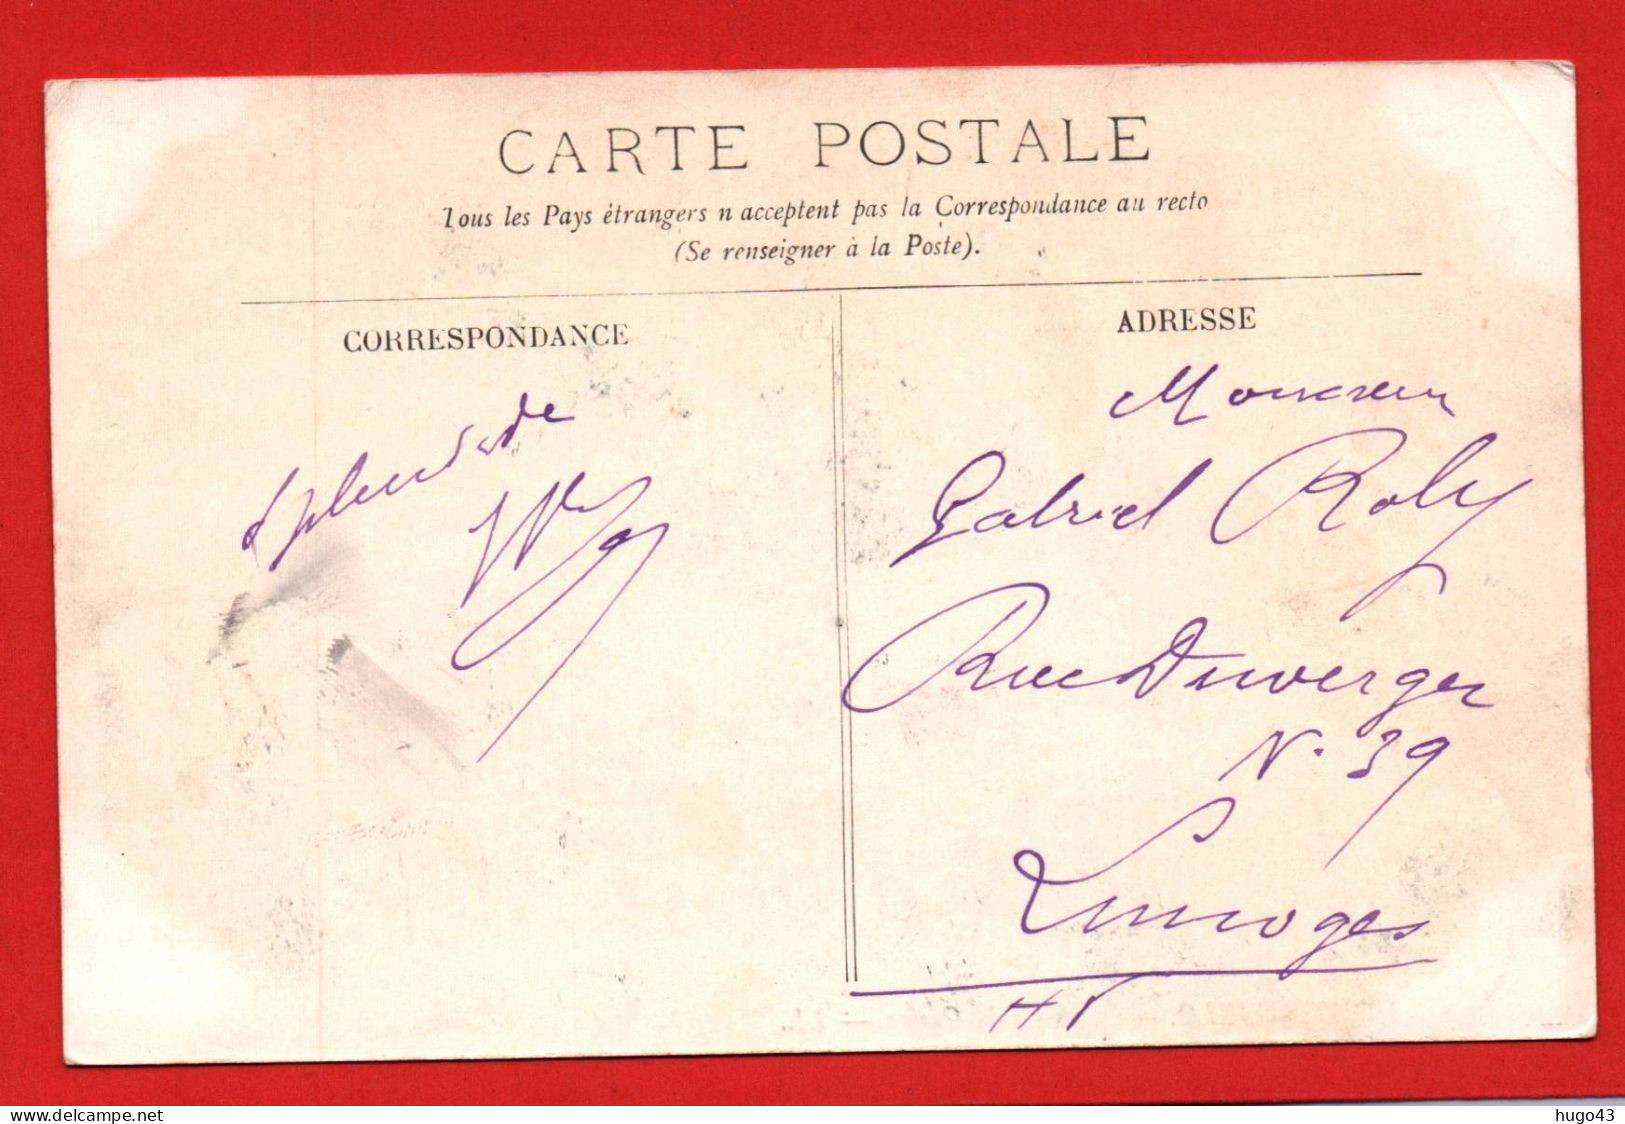 (RECTO / VERSO) MONTE CARLO EN 1908 - ENSEMBLE DU CASINO - BEAU TIMBRE ET CACHET DE MONACO - CPA COULEUR - Spielbank